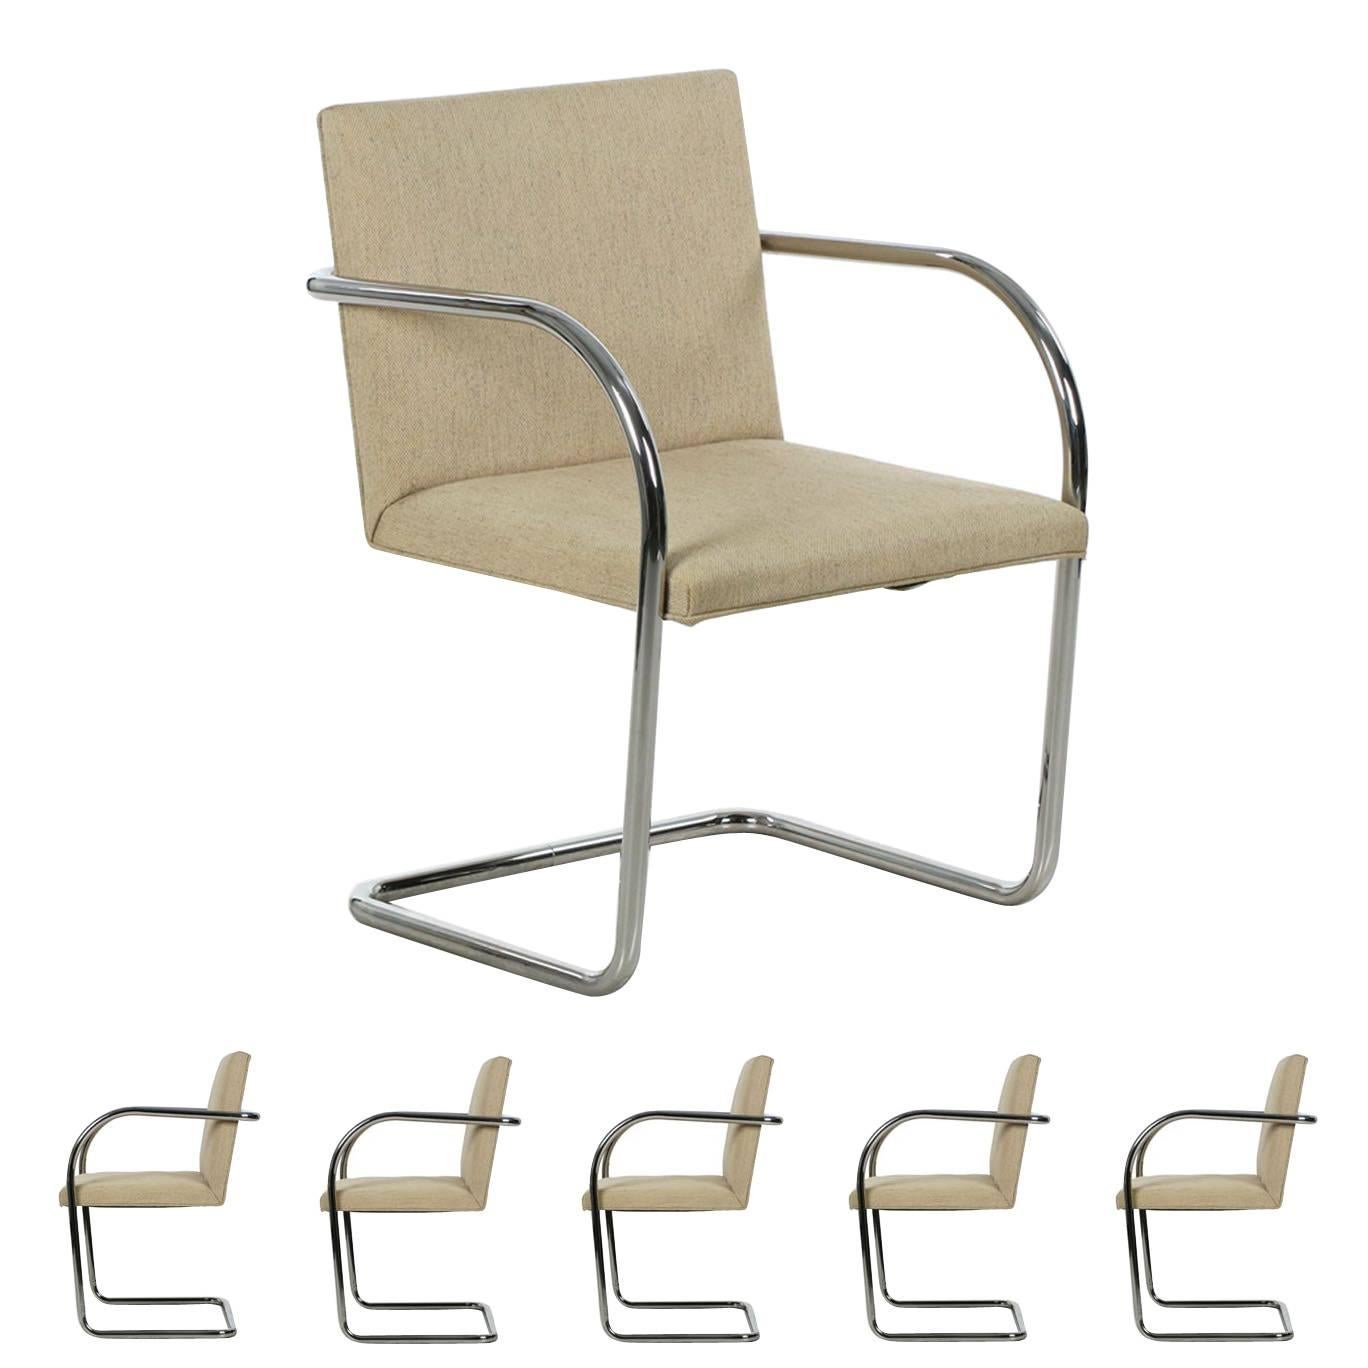 Six Ludwig Mies van der Rohe for Knoll BRNO Chrome Dining Chairs, circe 1979